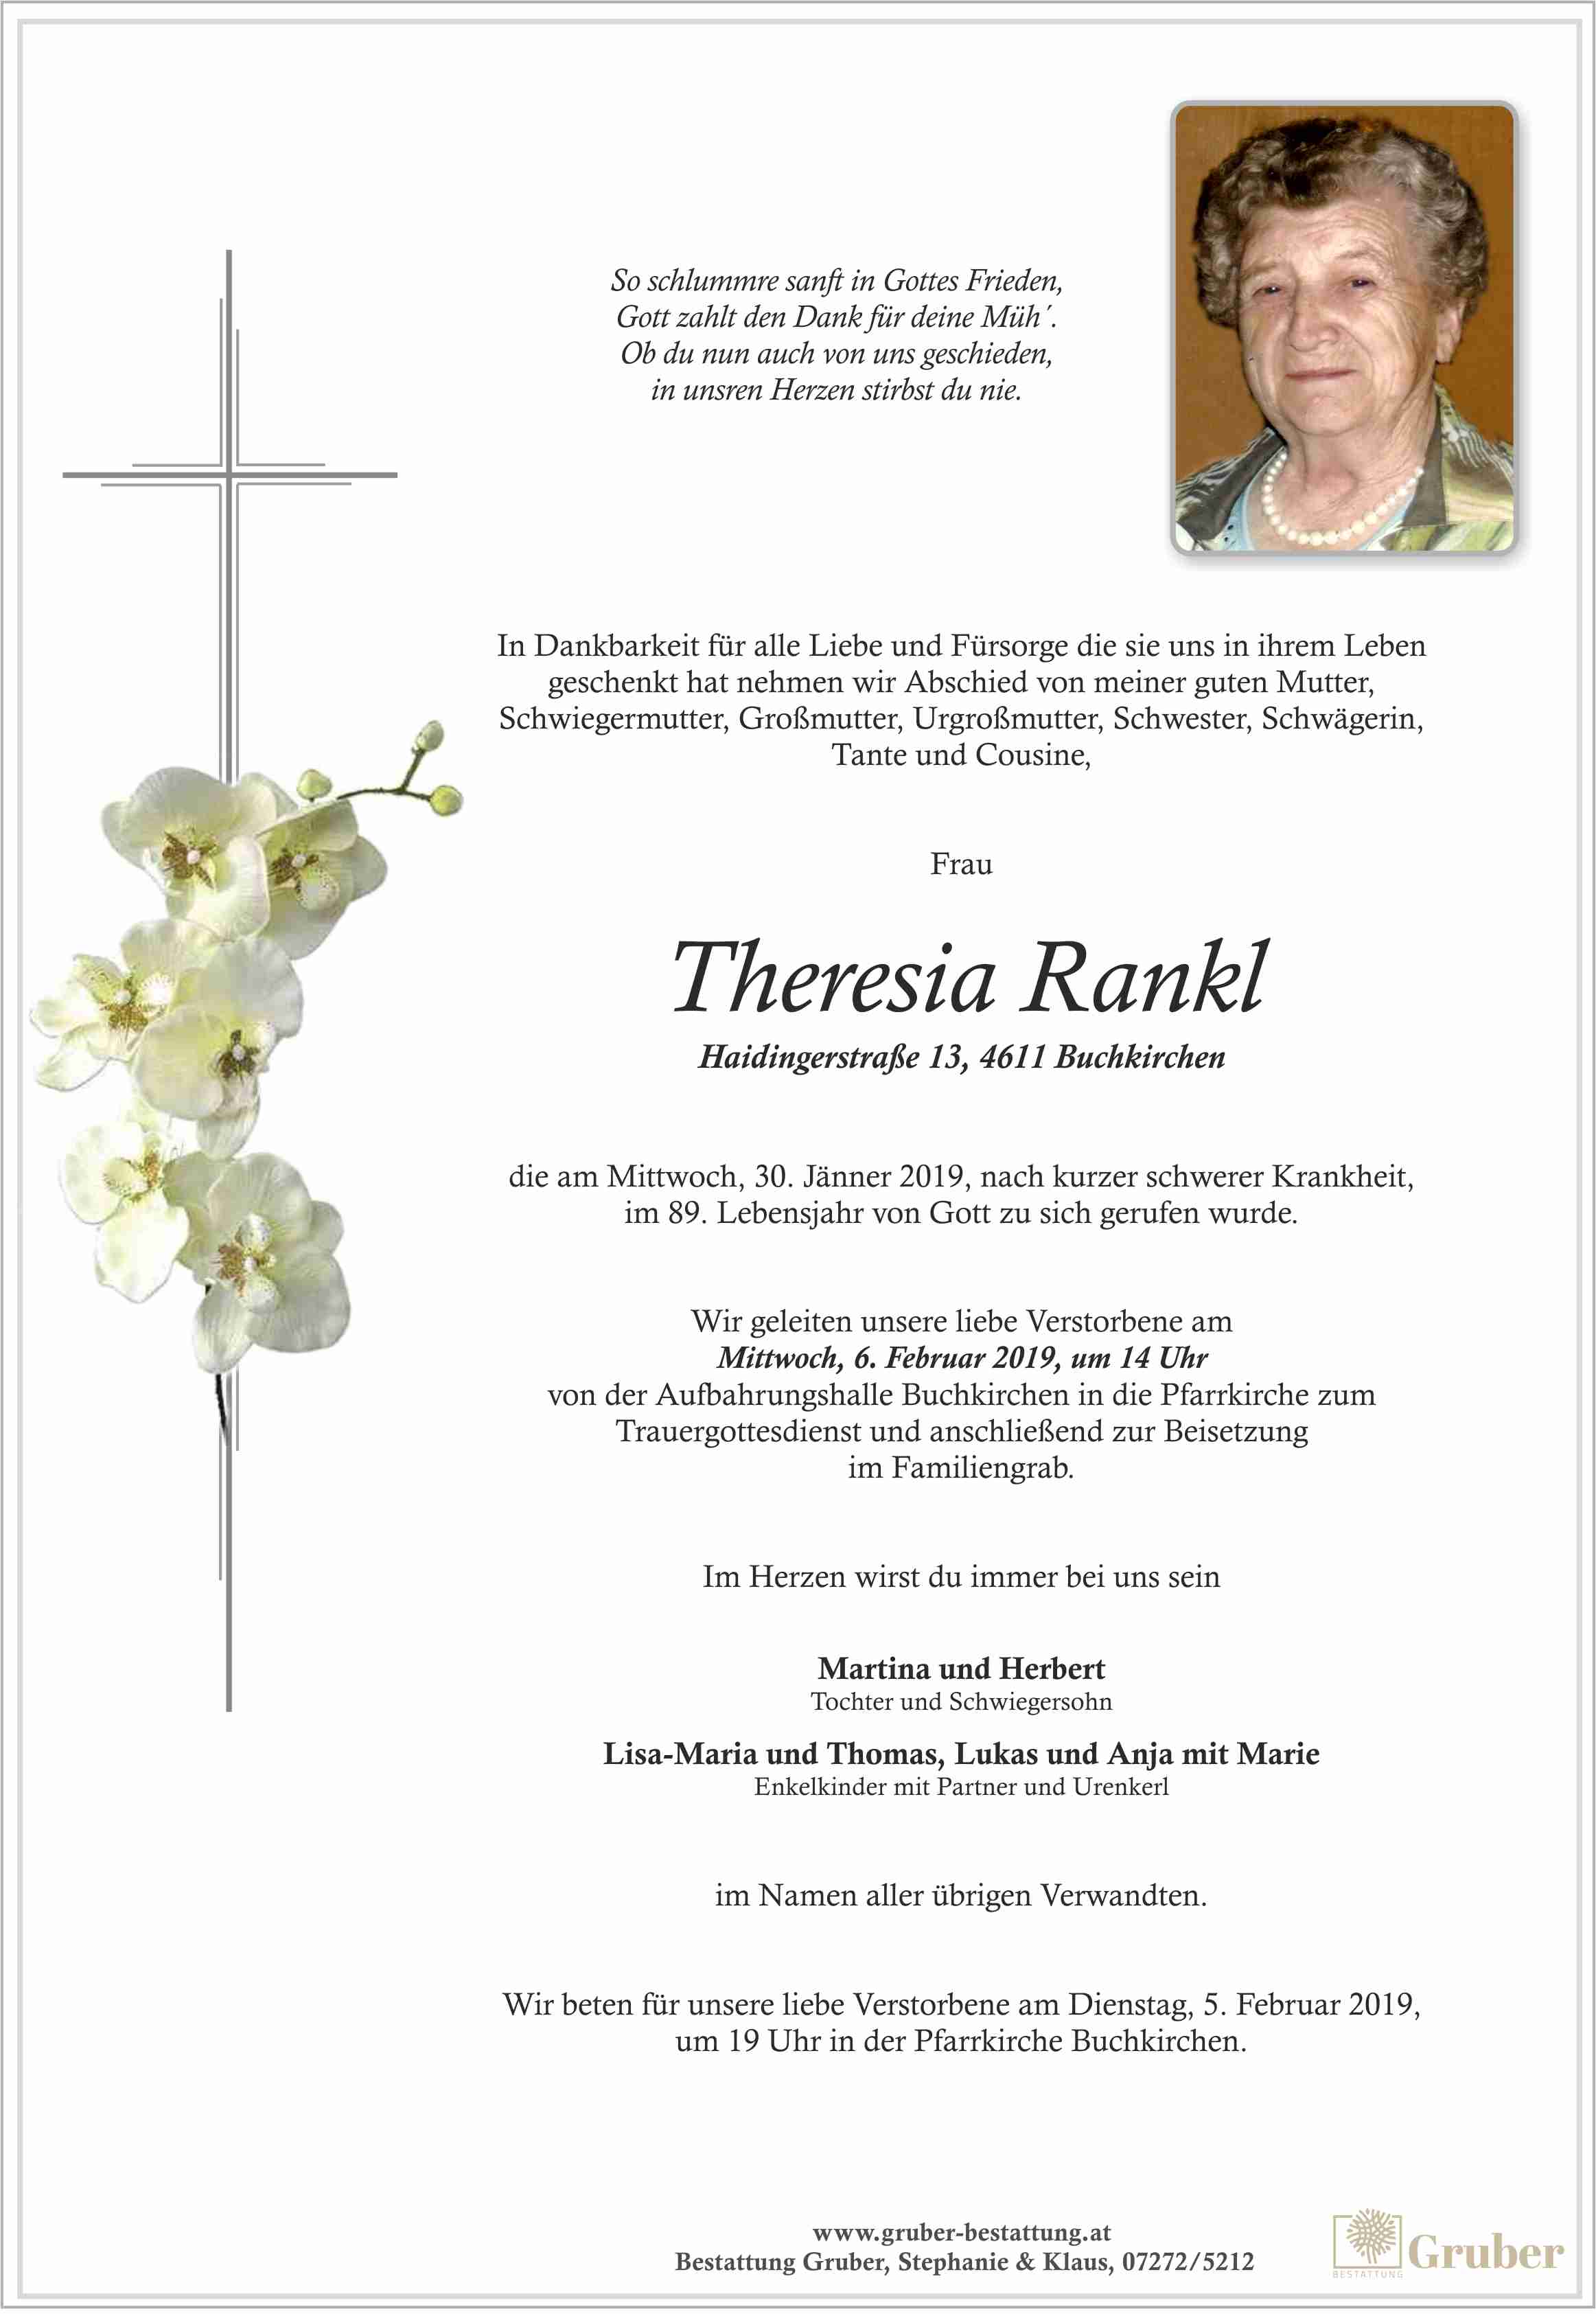 Theresia Rankl (Buchkirchen)